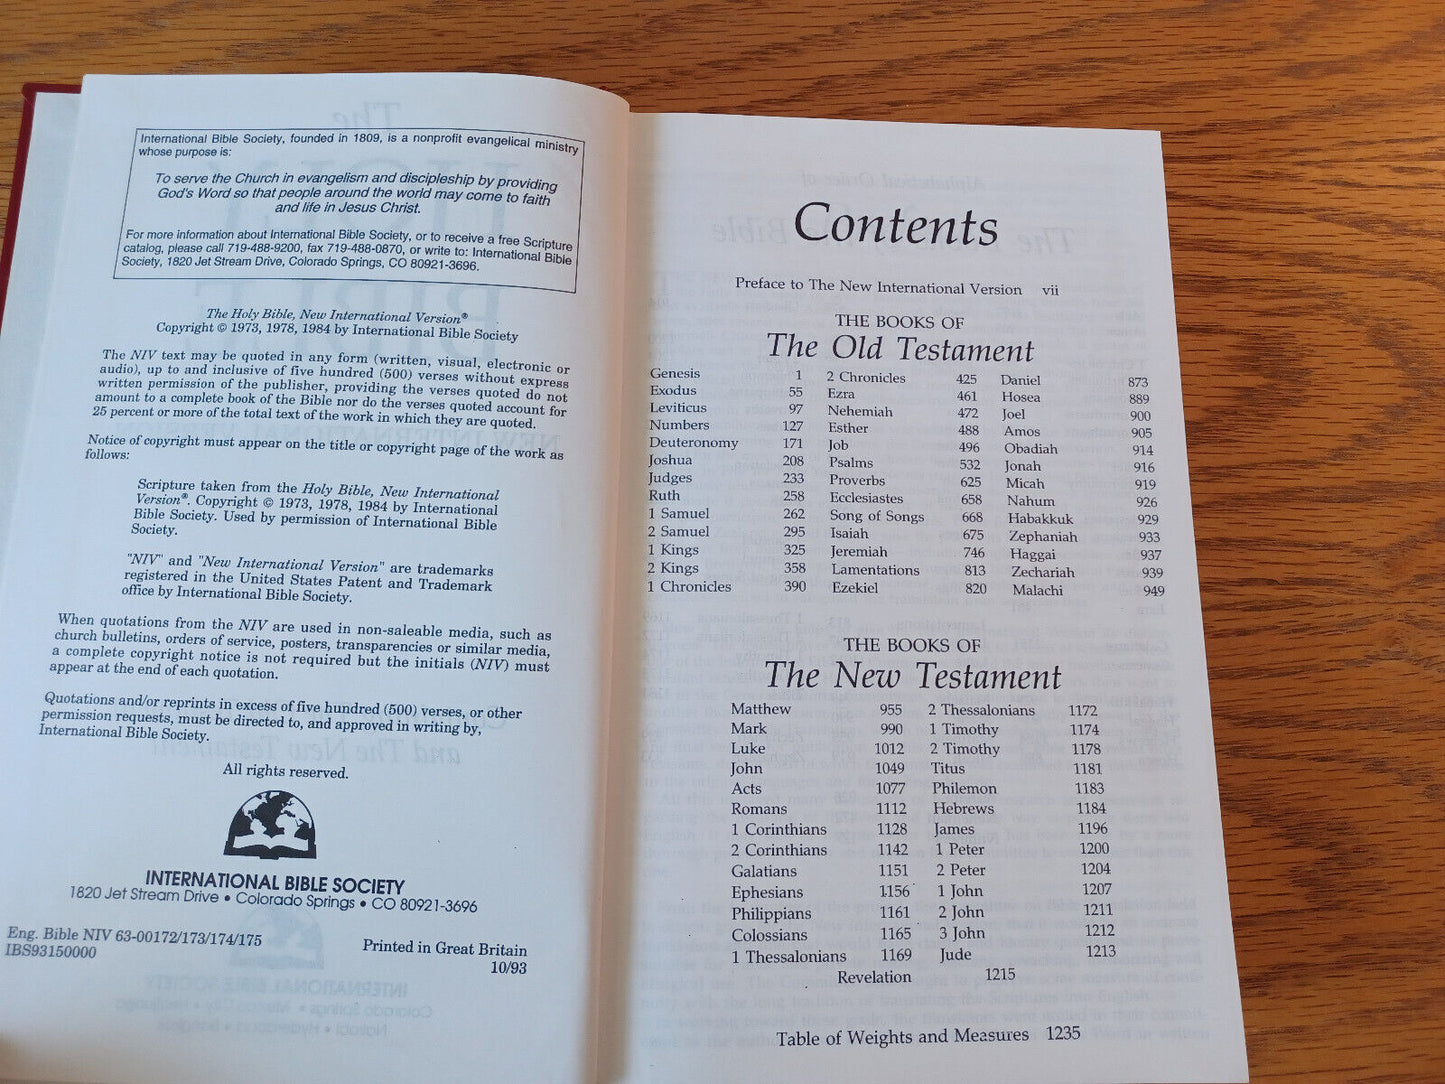 Holy Bible New International Version International Bible Society 1984 Hardcover